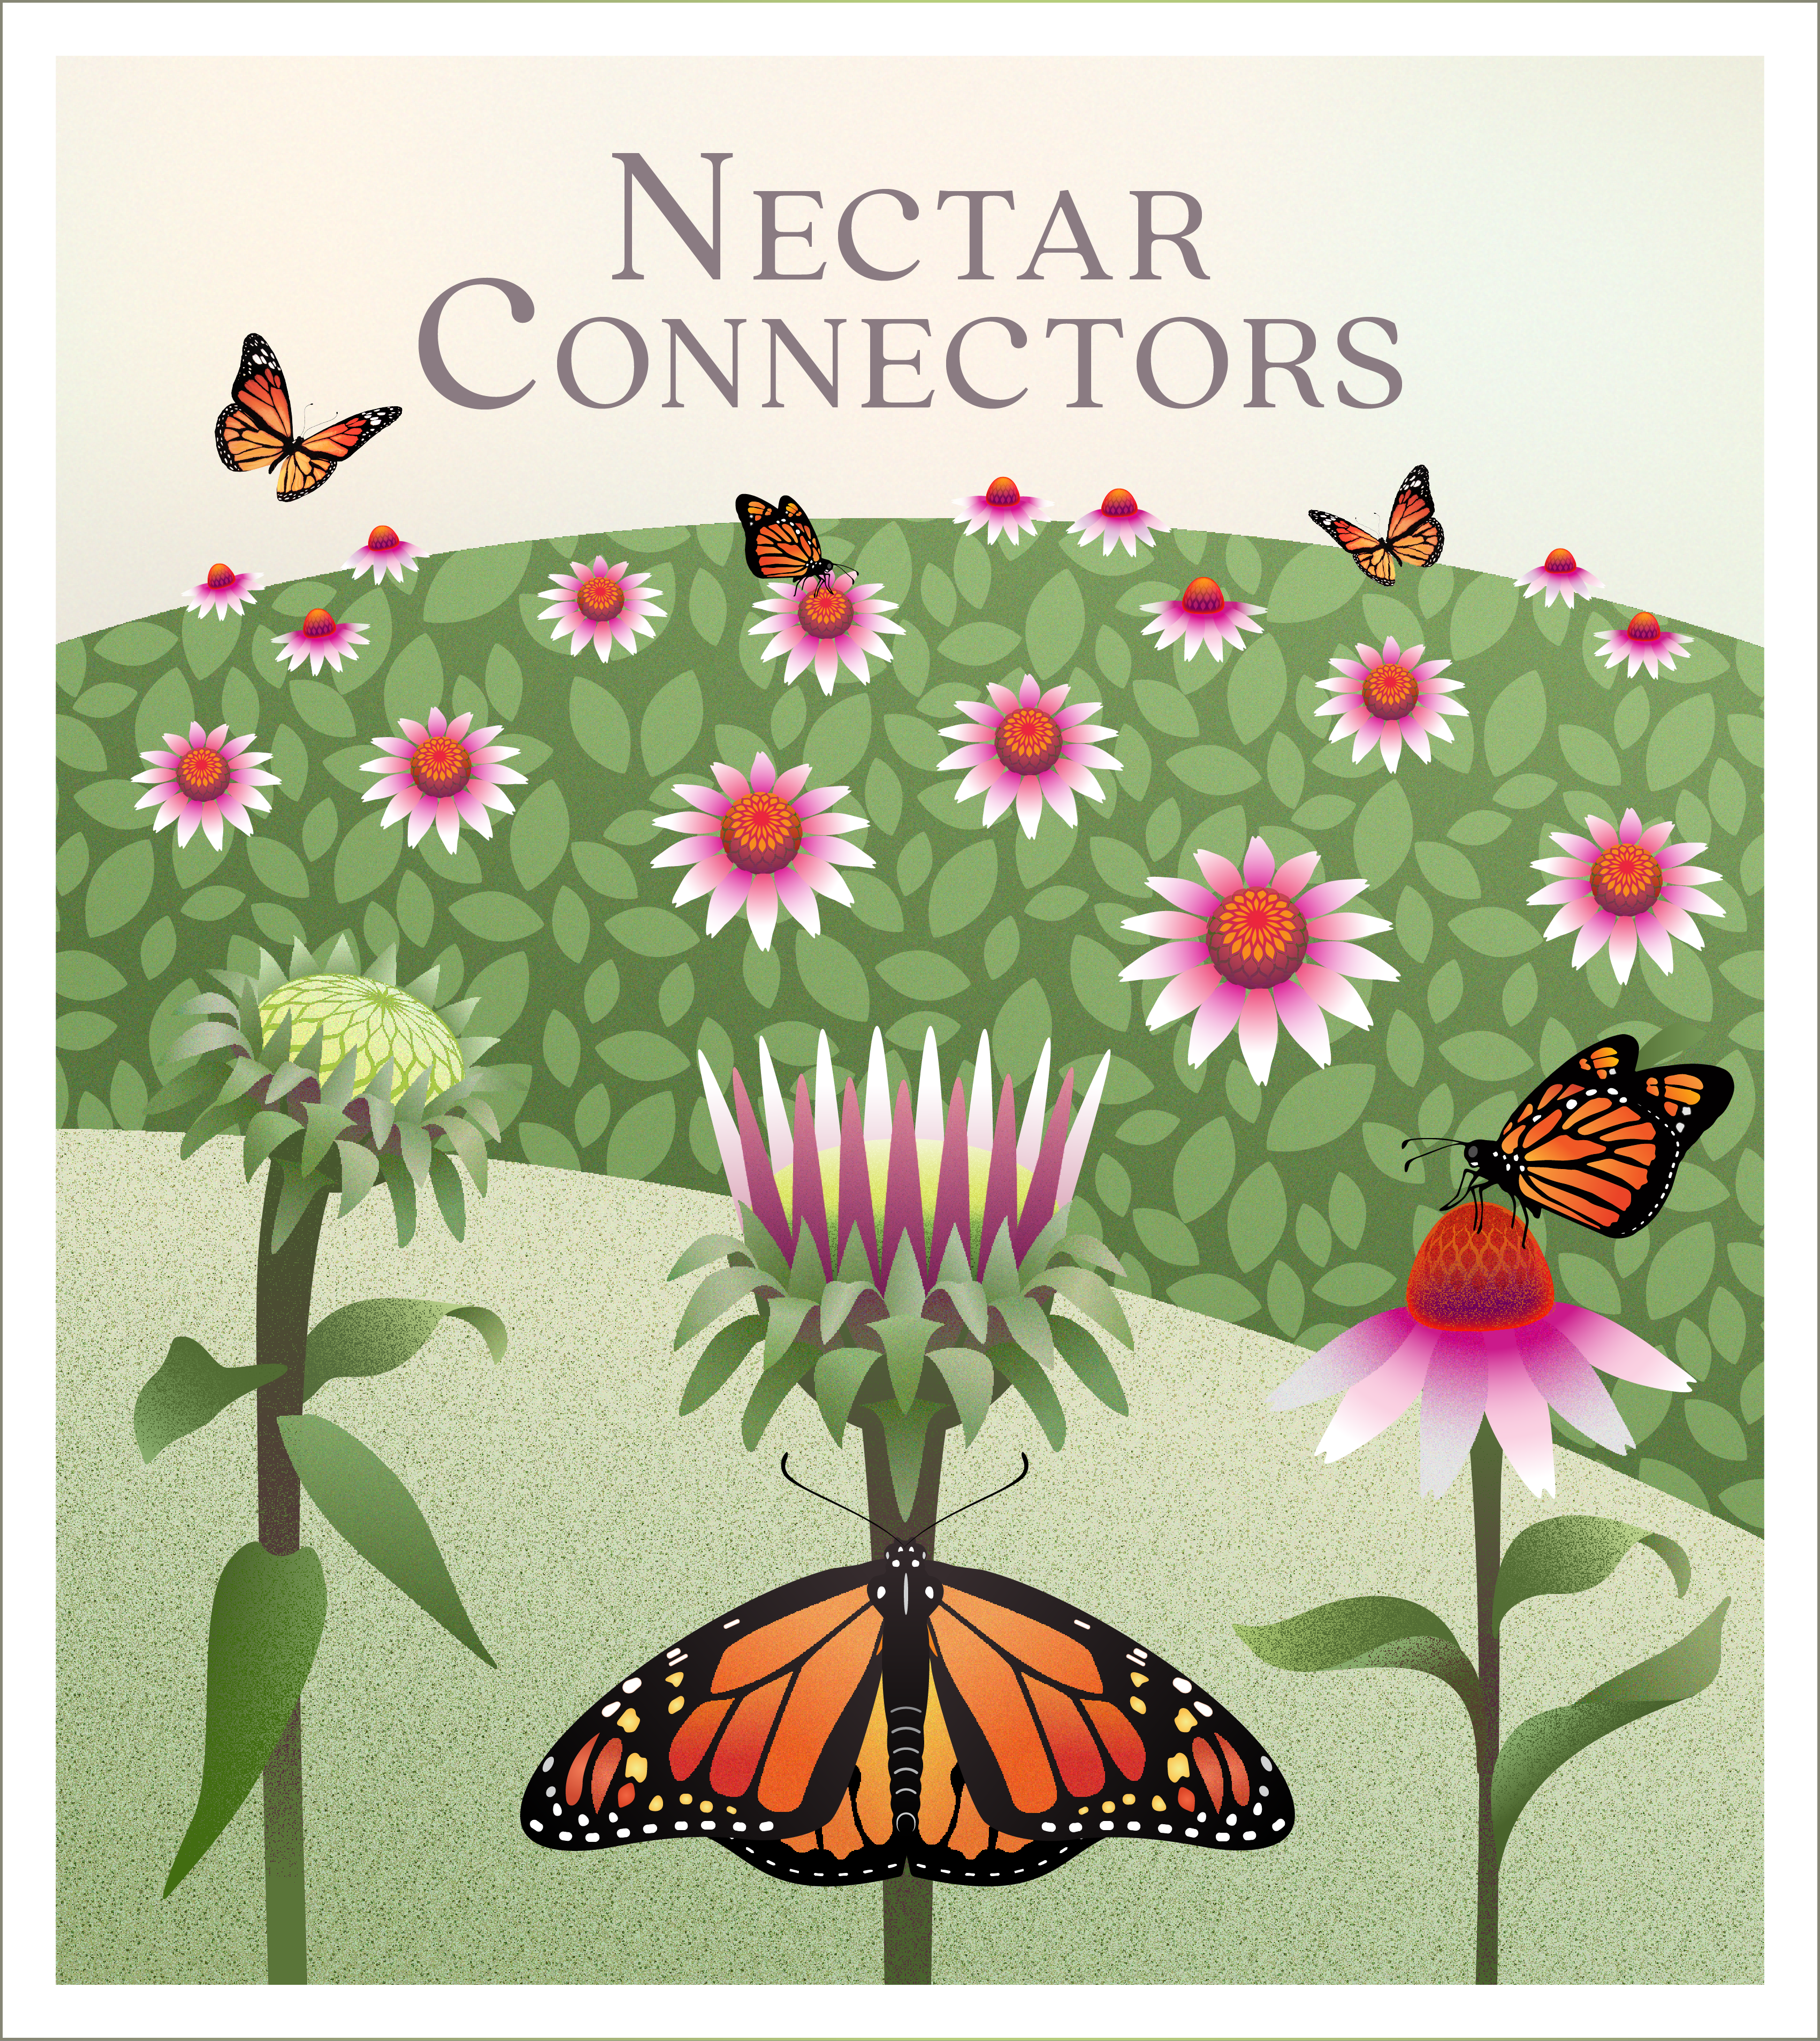 Nectar Connectors campaign logo